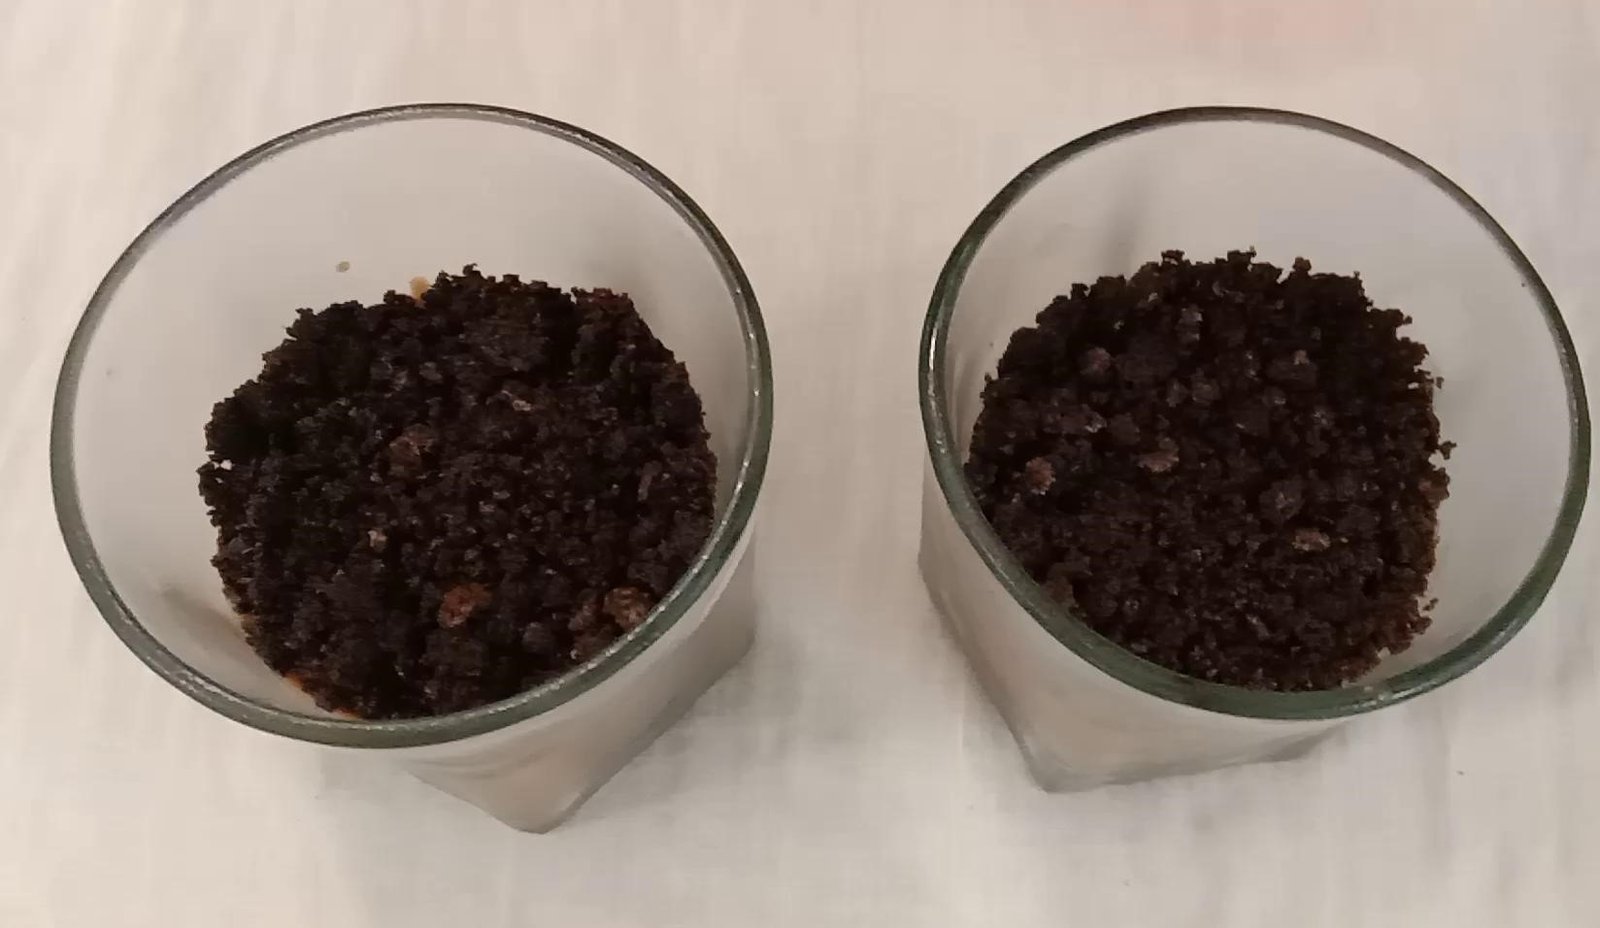 Keeping oreo powder & chocolate filled glasses in freezer, Oreo pudding.